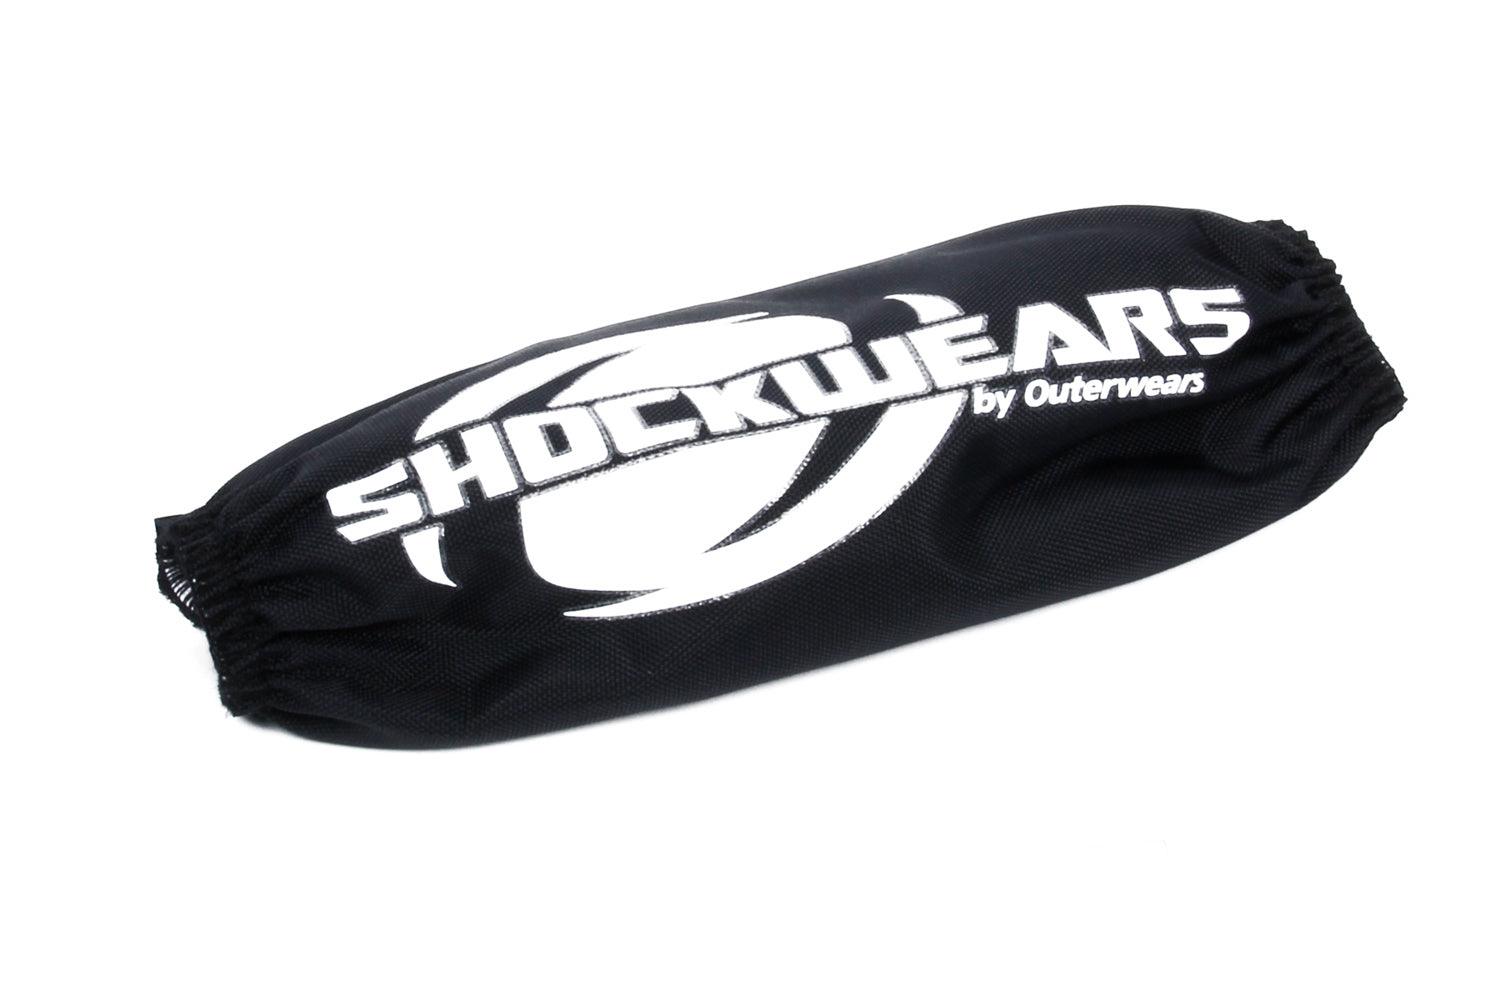 Shockwears for QM Shocks Black Set of 4 - Burlile Performance Products